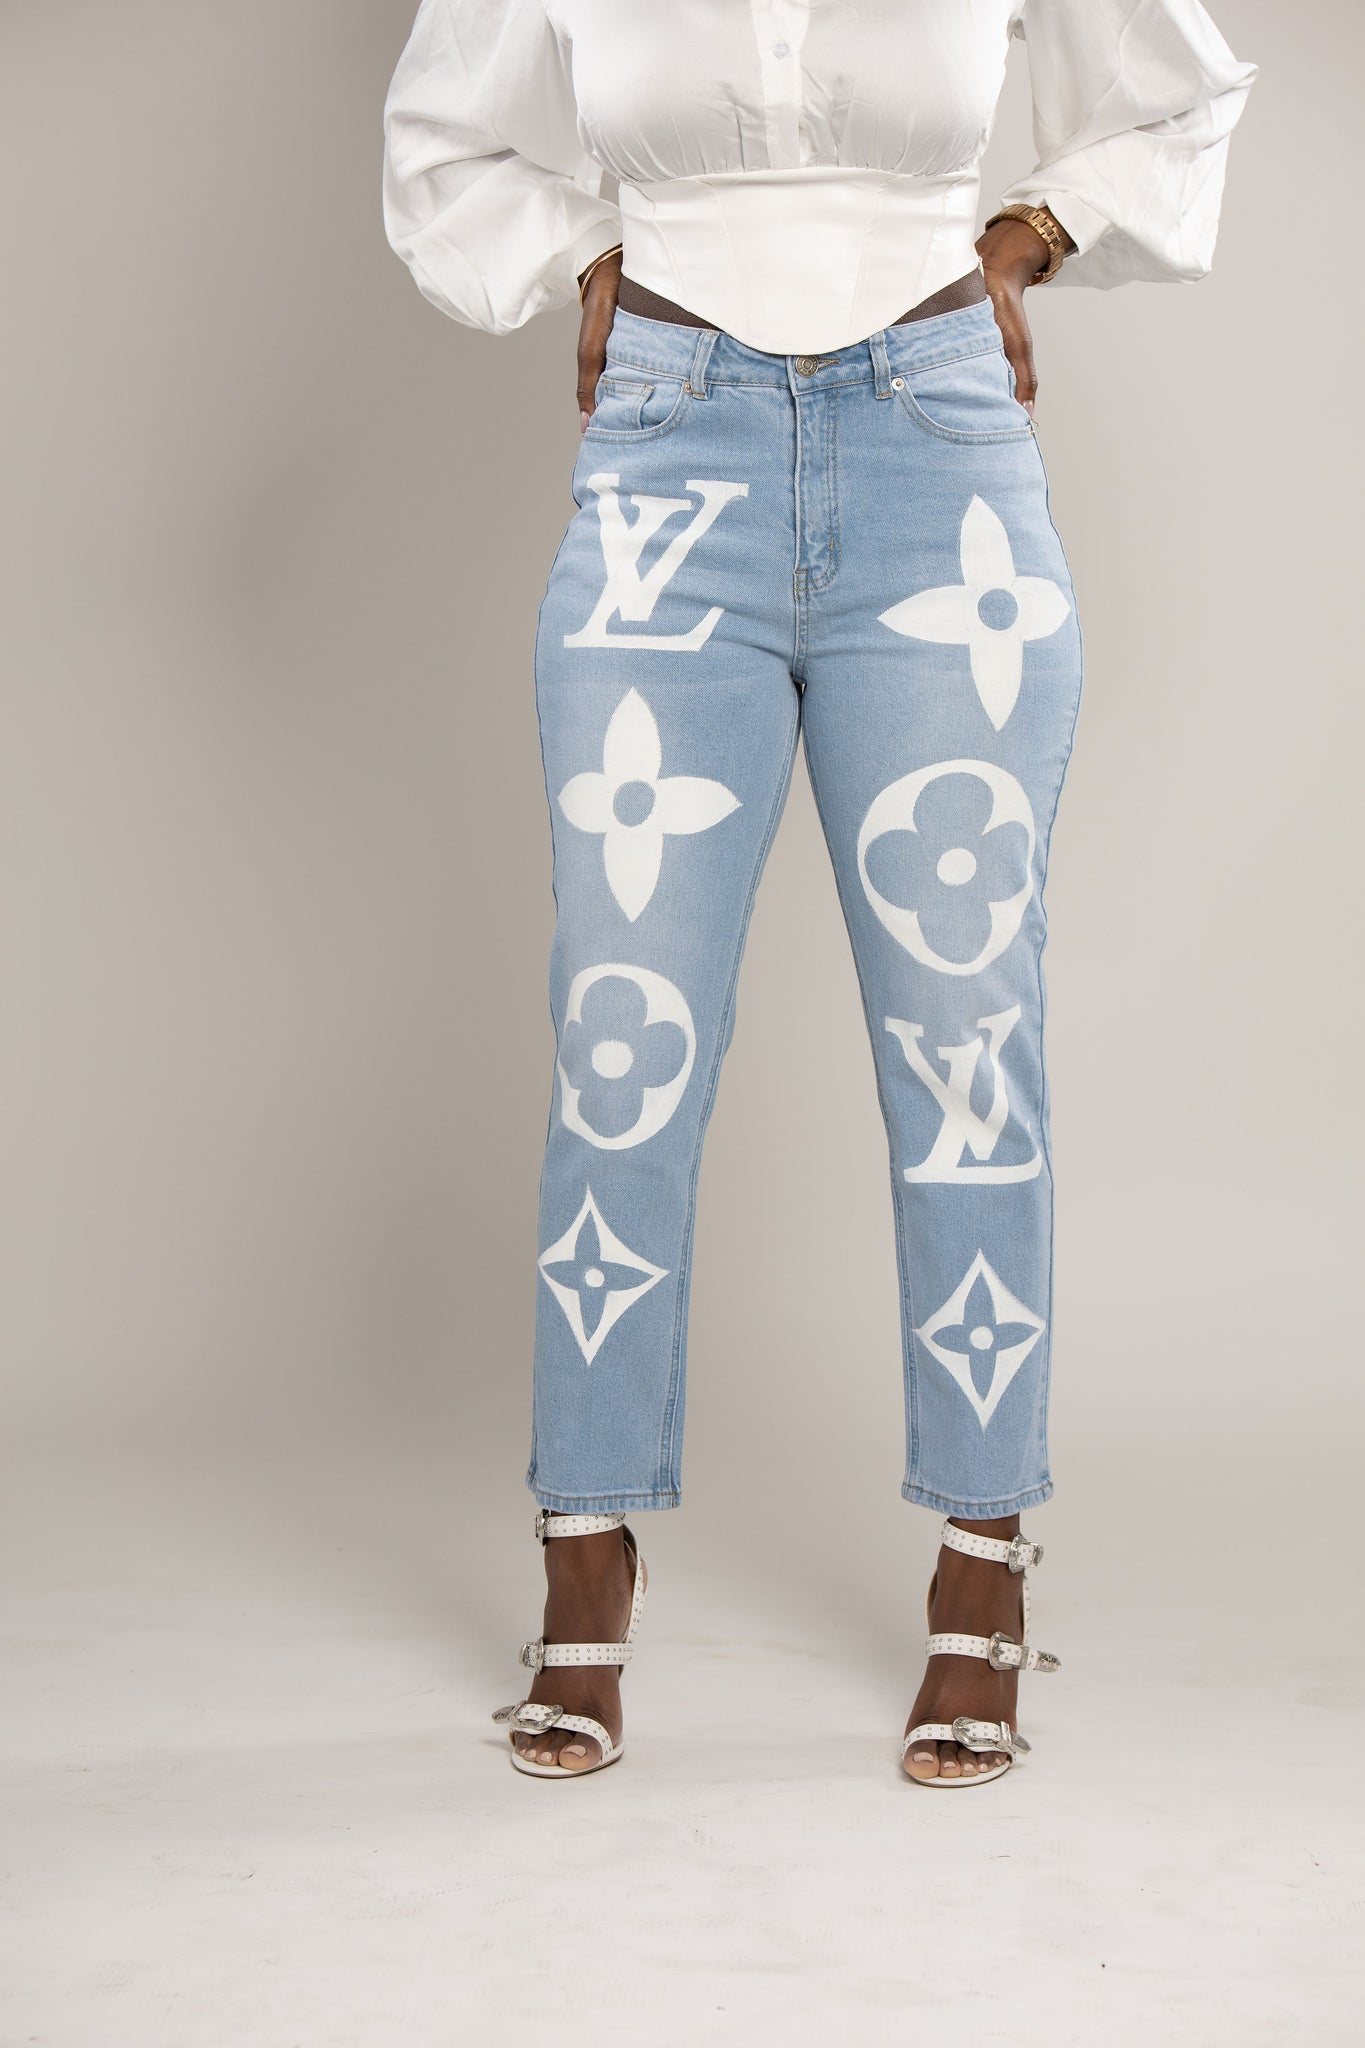 DIY Custom Louis Vuitton Jeans 